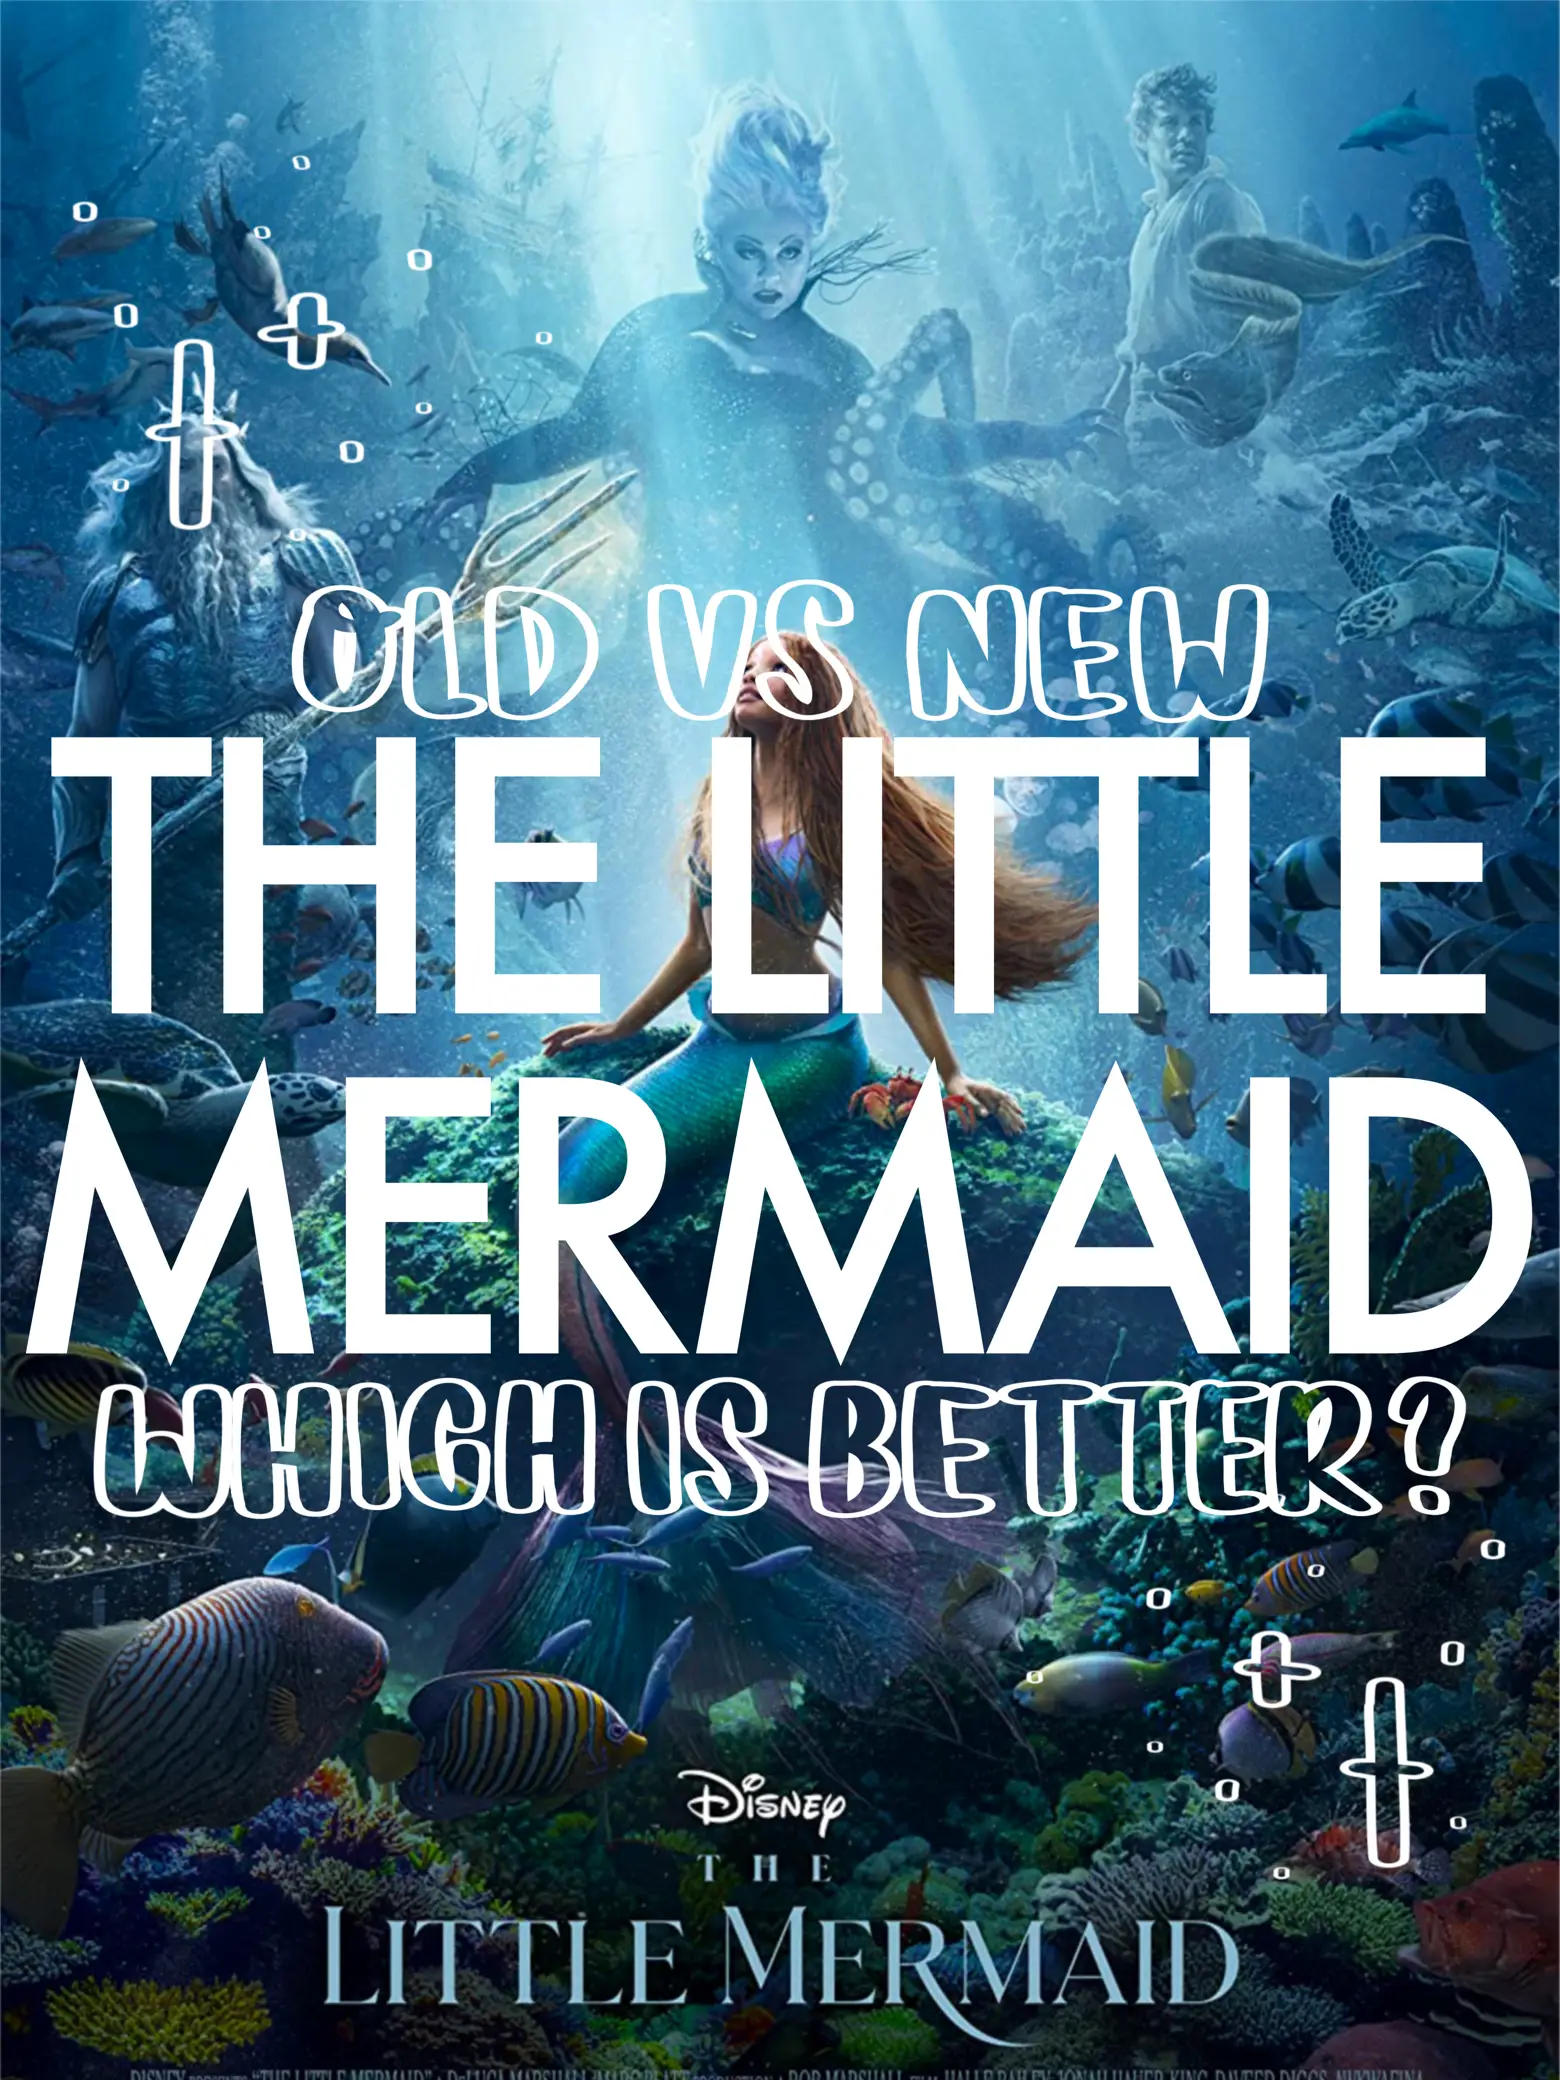 Ursula Little Mermaid - Lemon8 Search